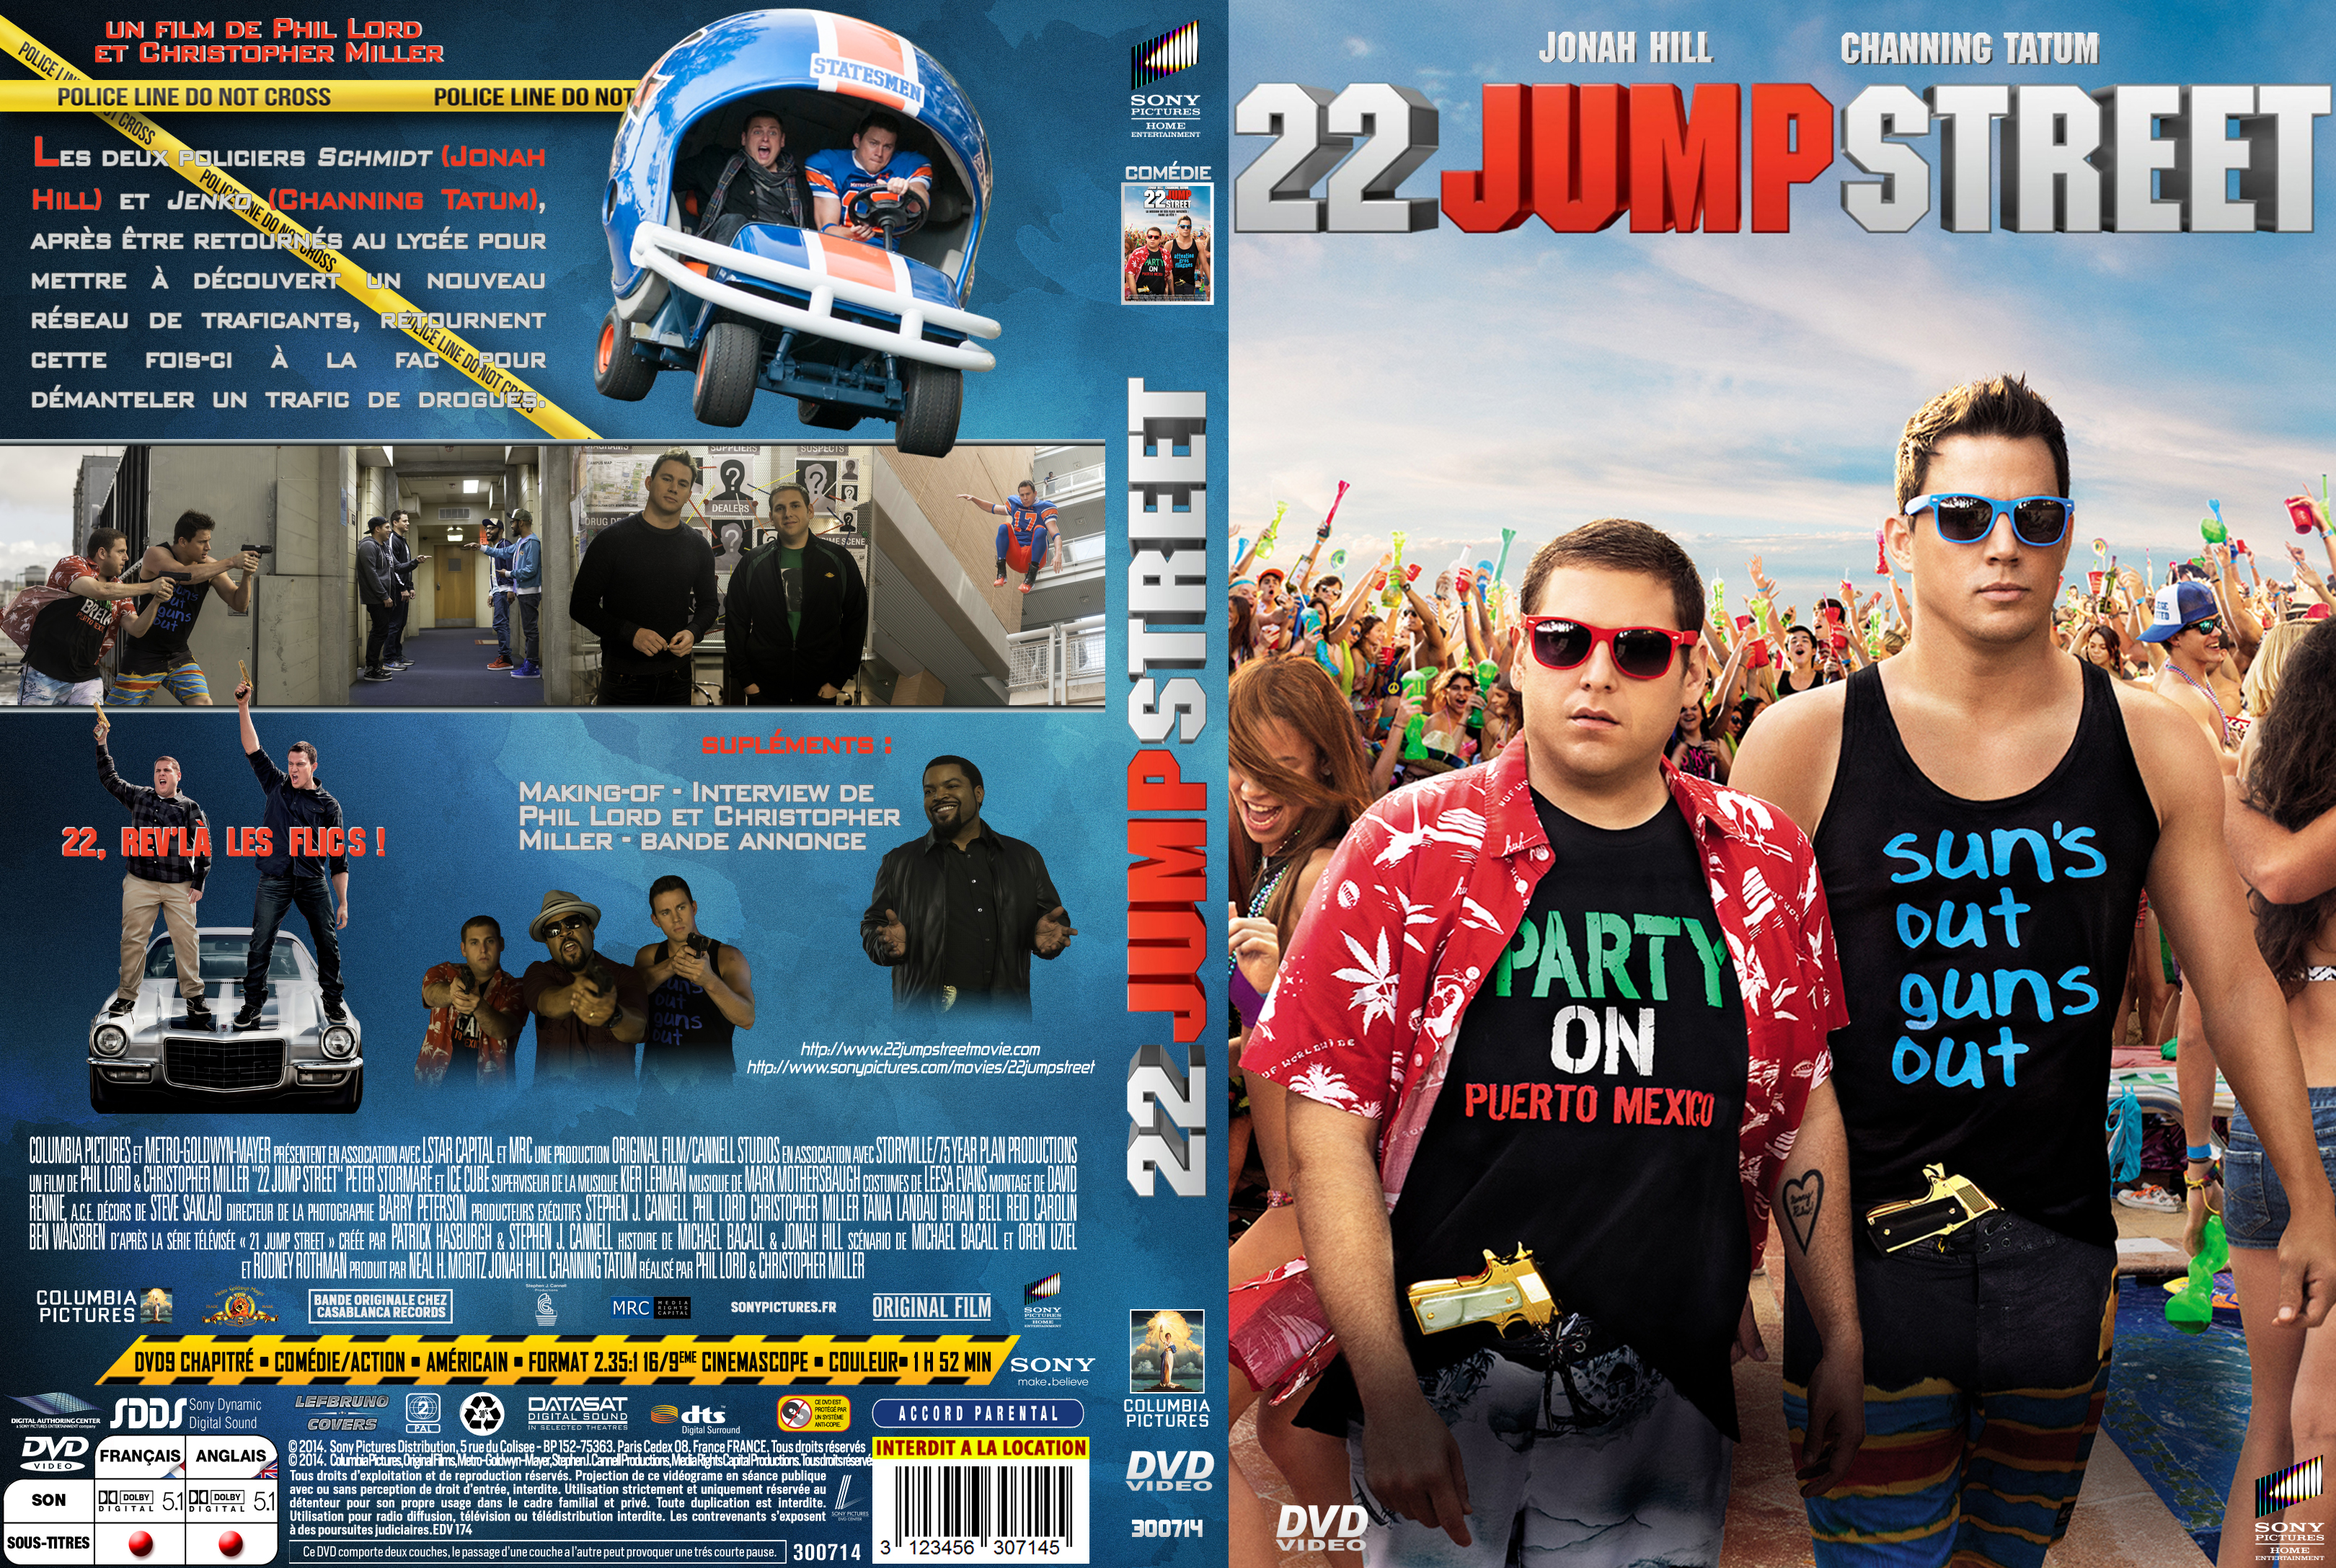 Jaquette DVD 22 Jump Street custom